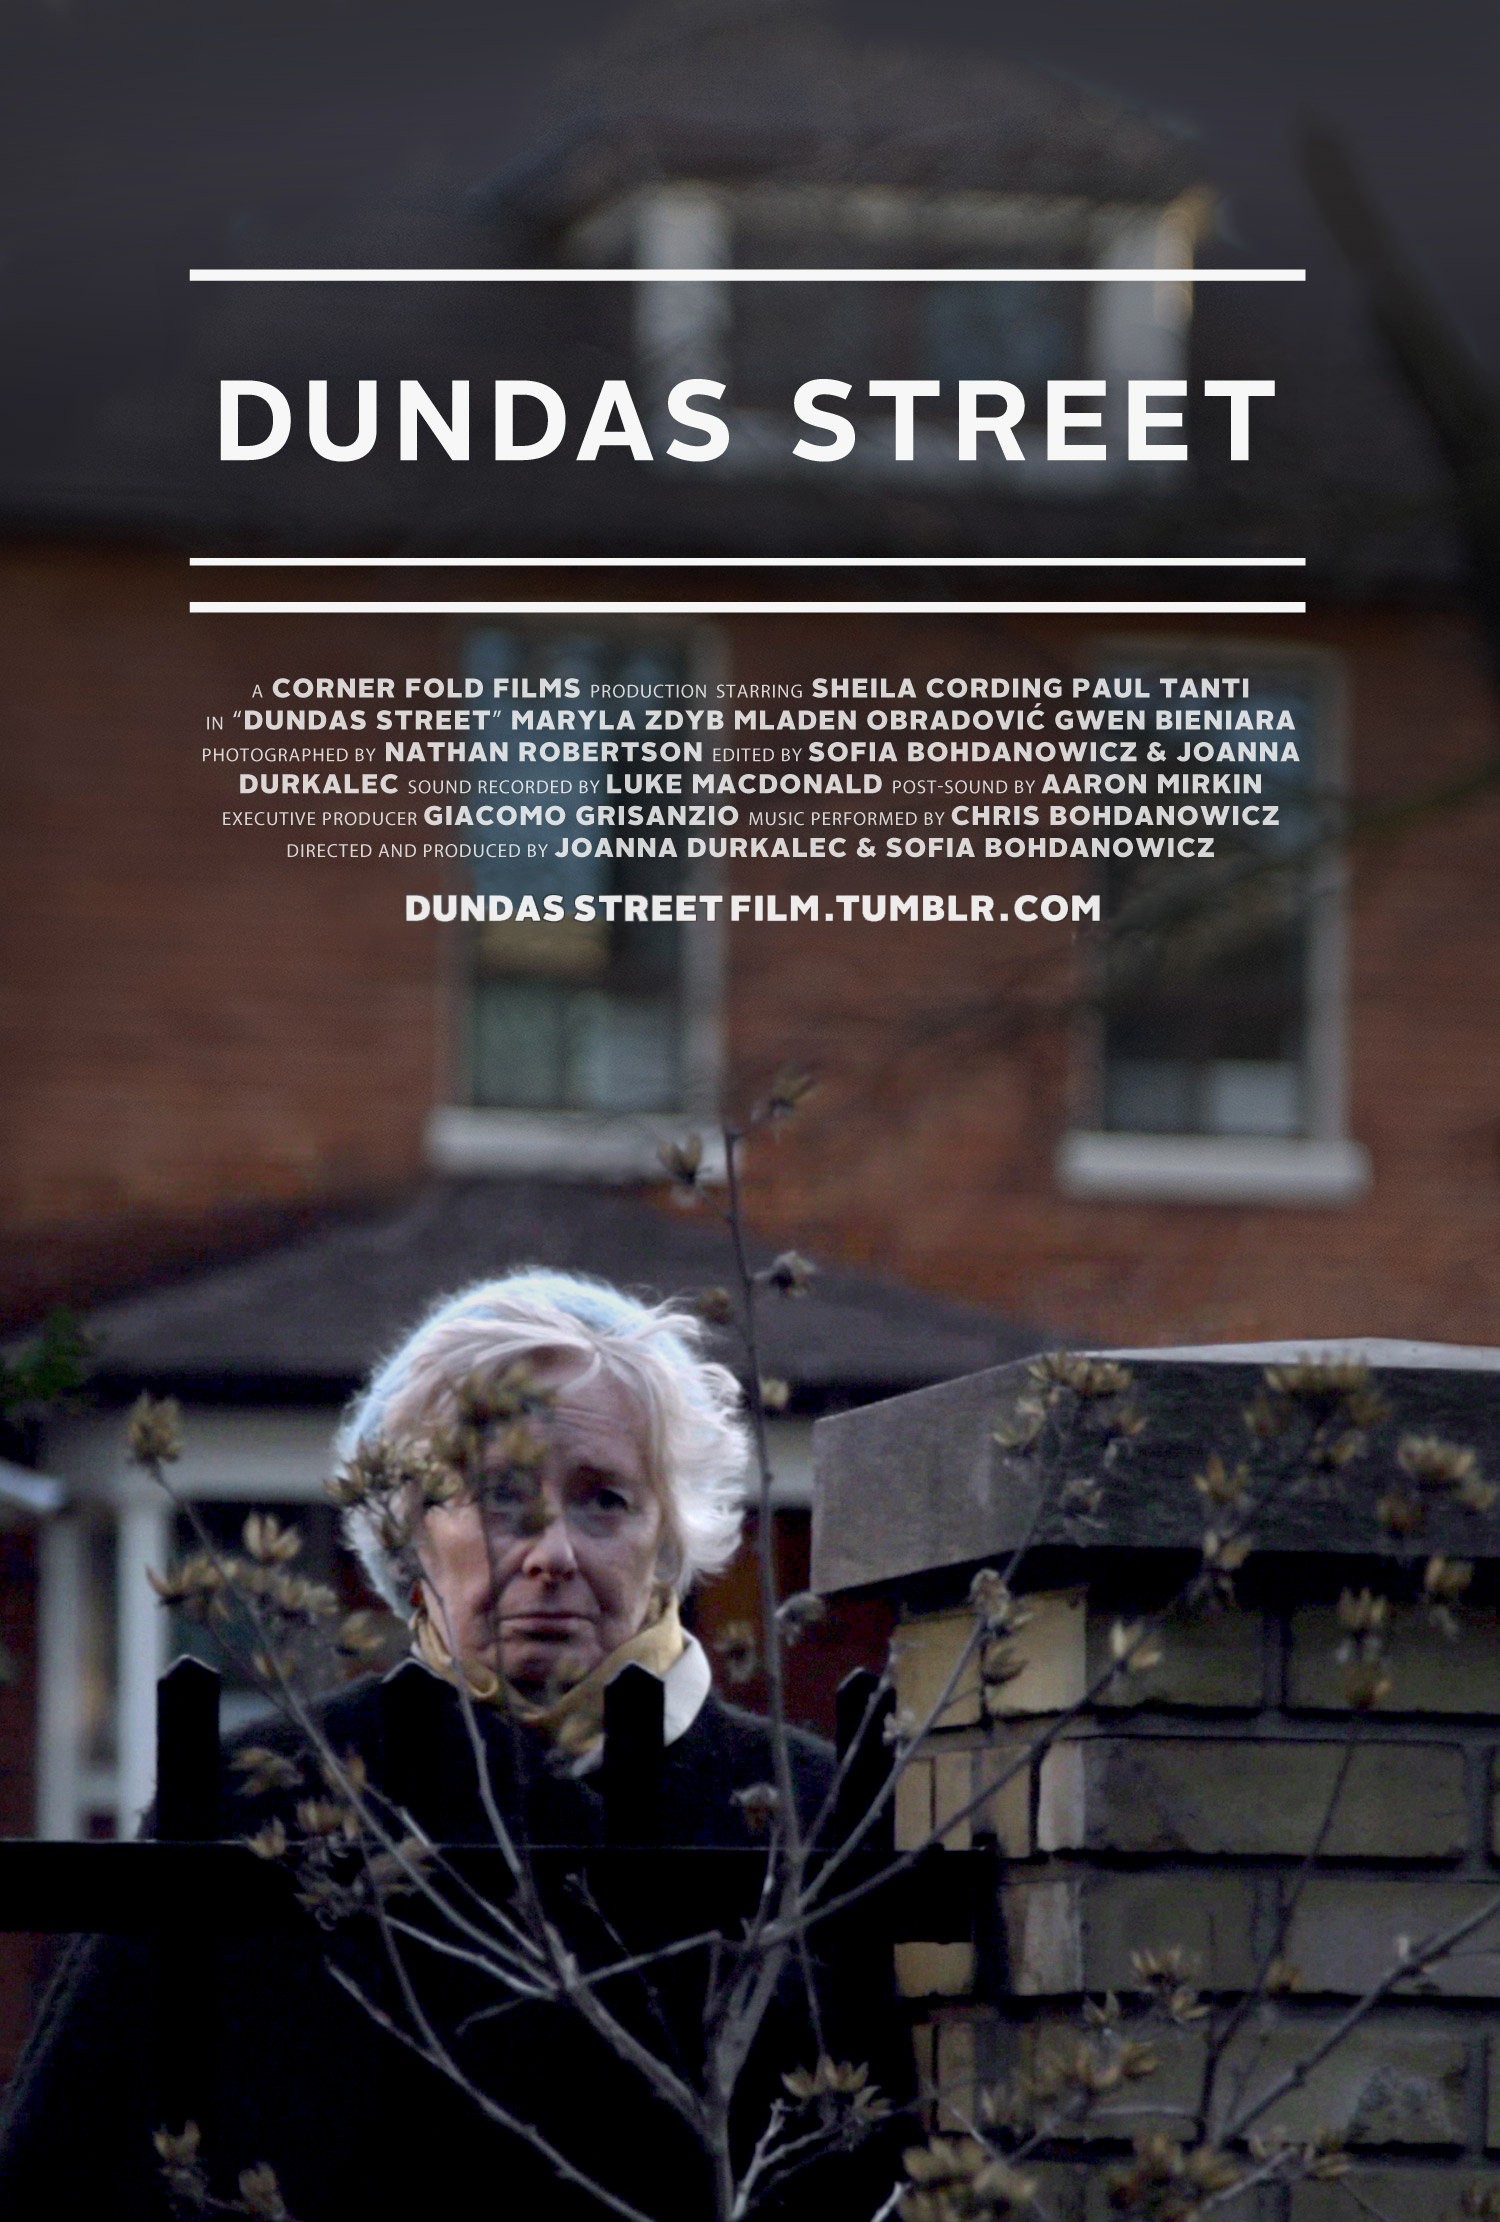 Mega Sized Movie Poster Image for Dundas Street